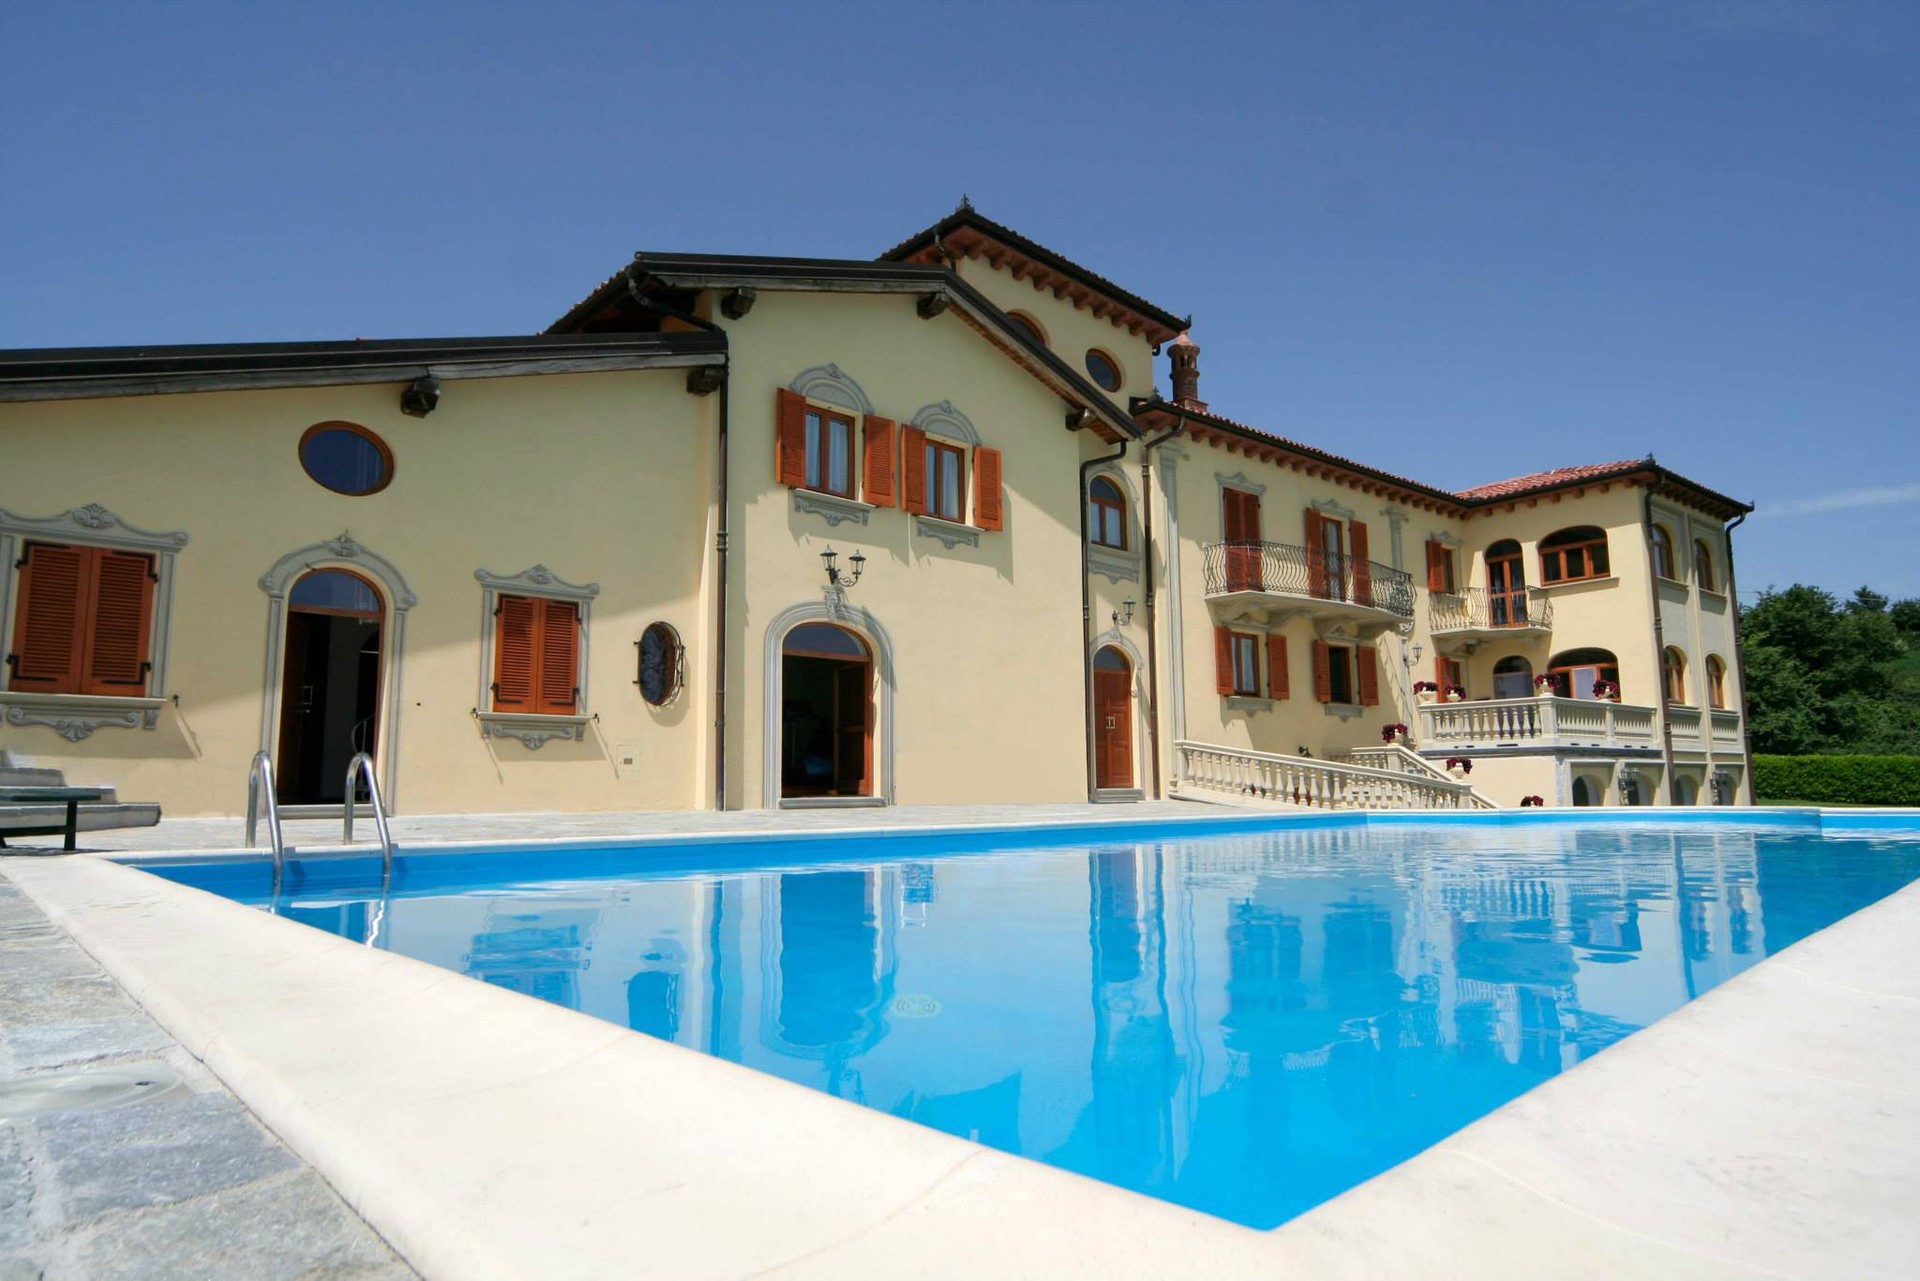 Se vende villa in zona tranquila Cuneo Piemonte